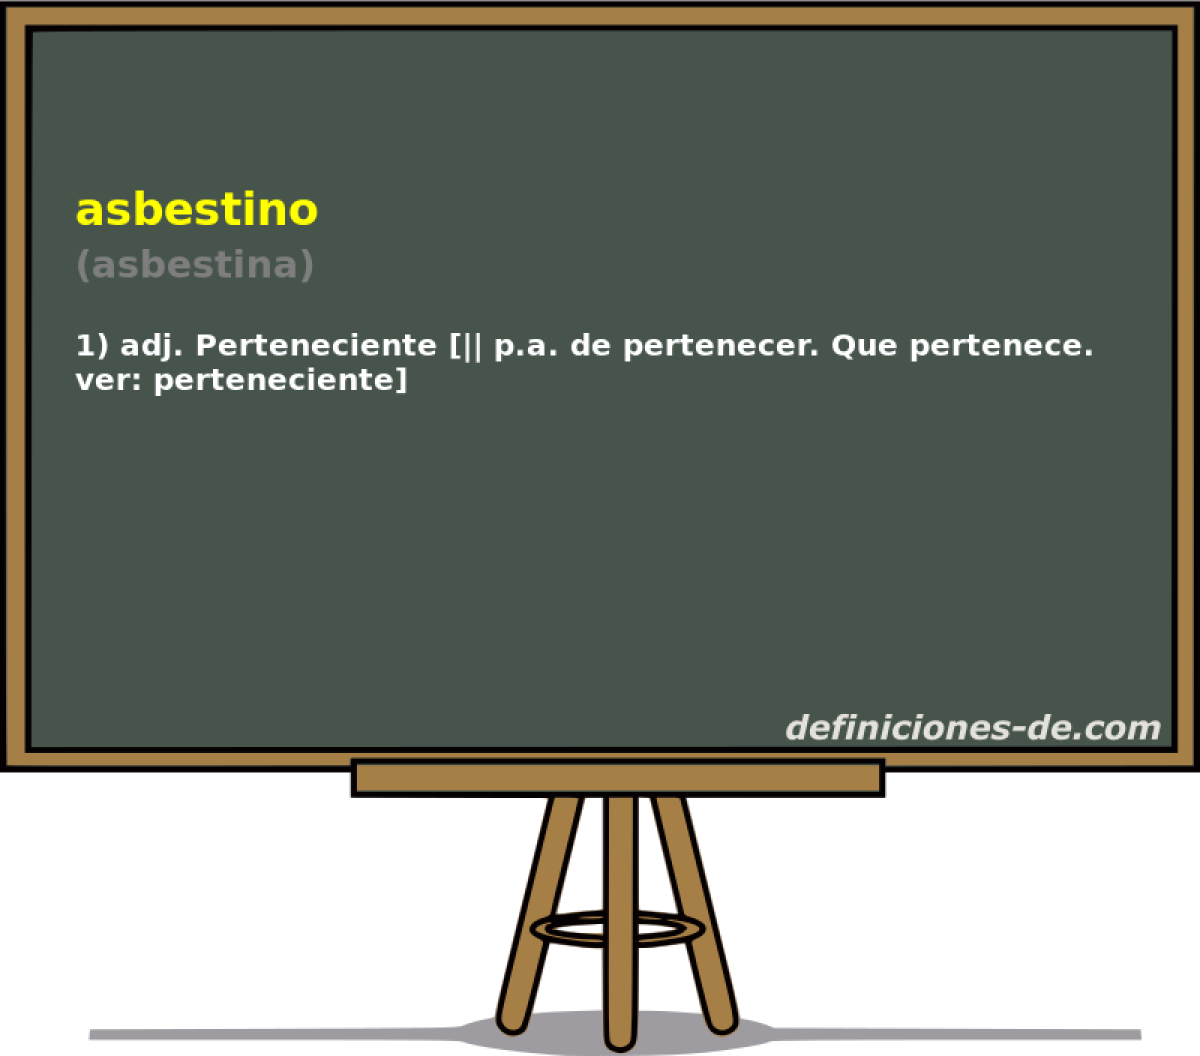 asbestino (asbestina)